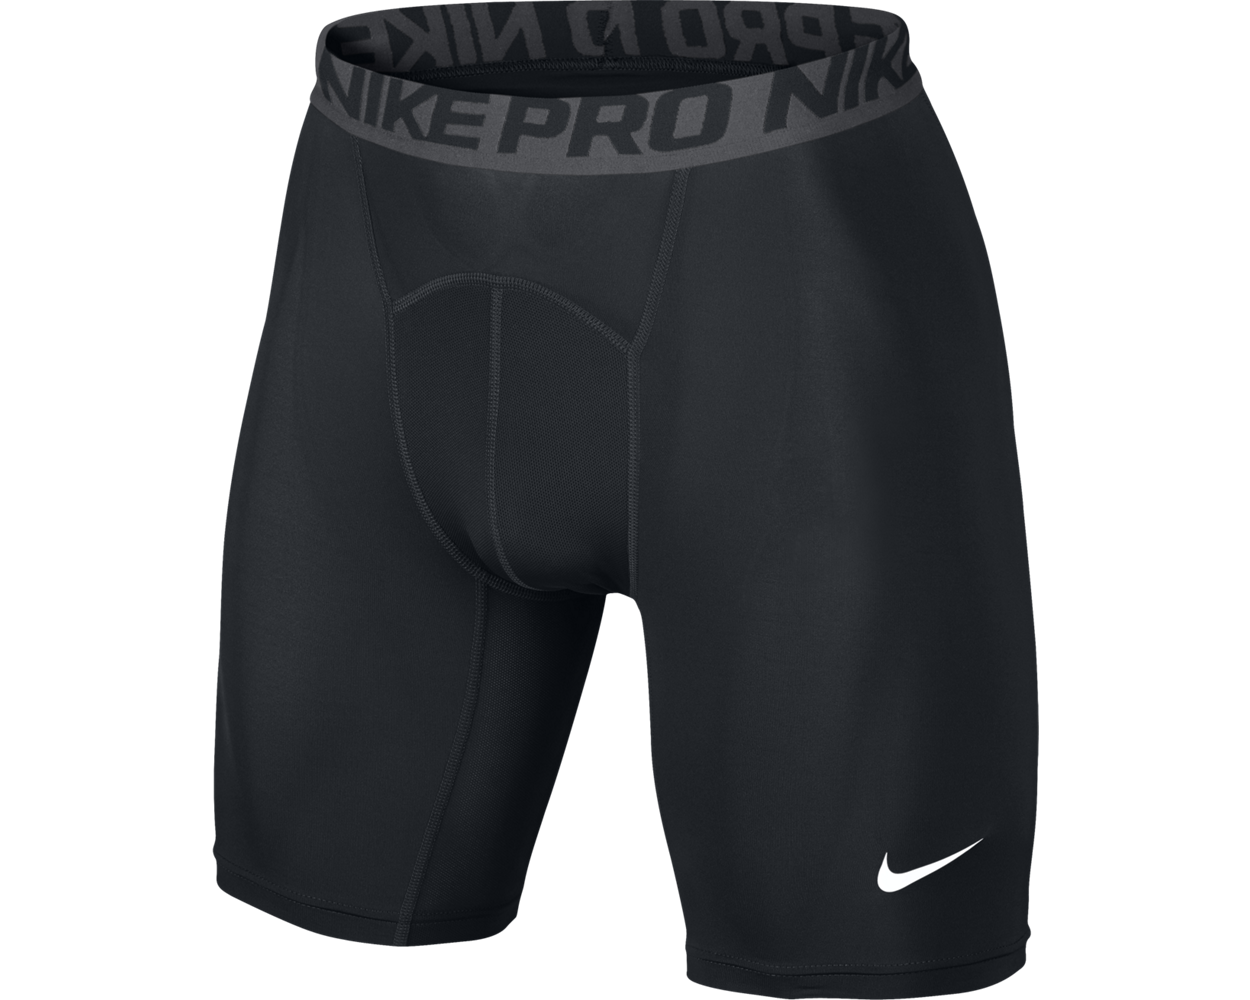 Nike Pro Cool Compression Shorts - Black/Grey